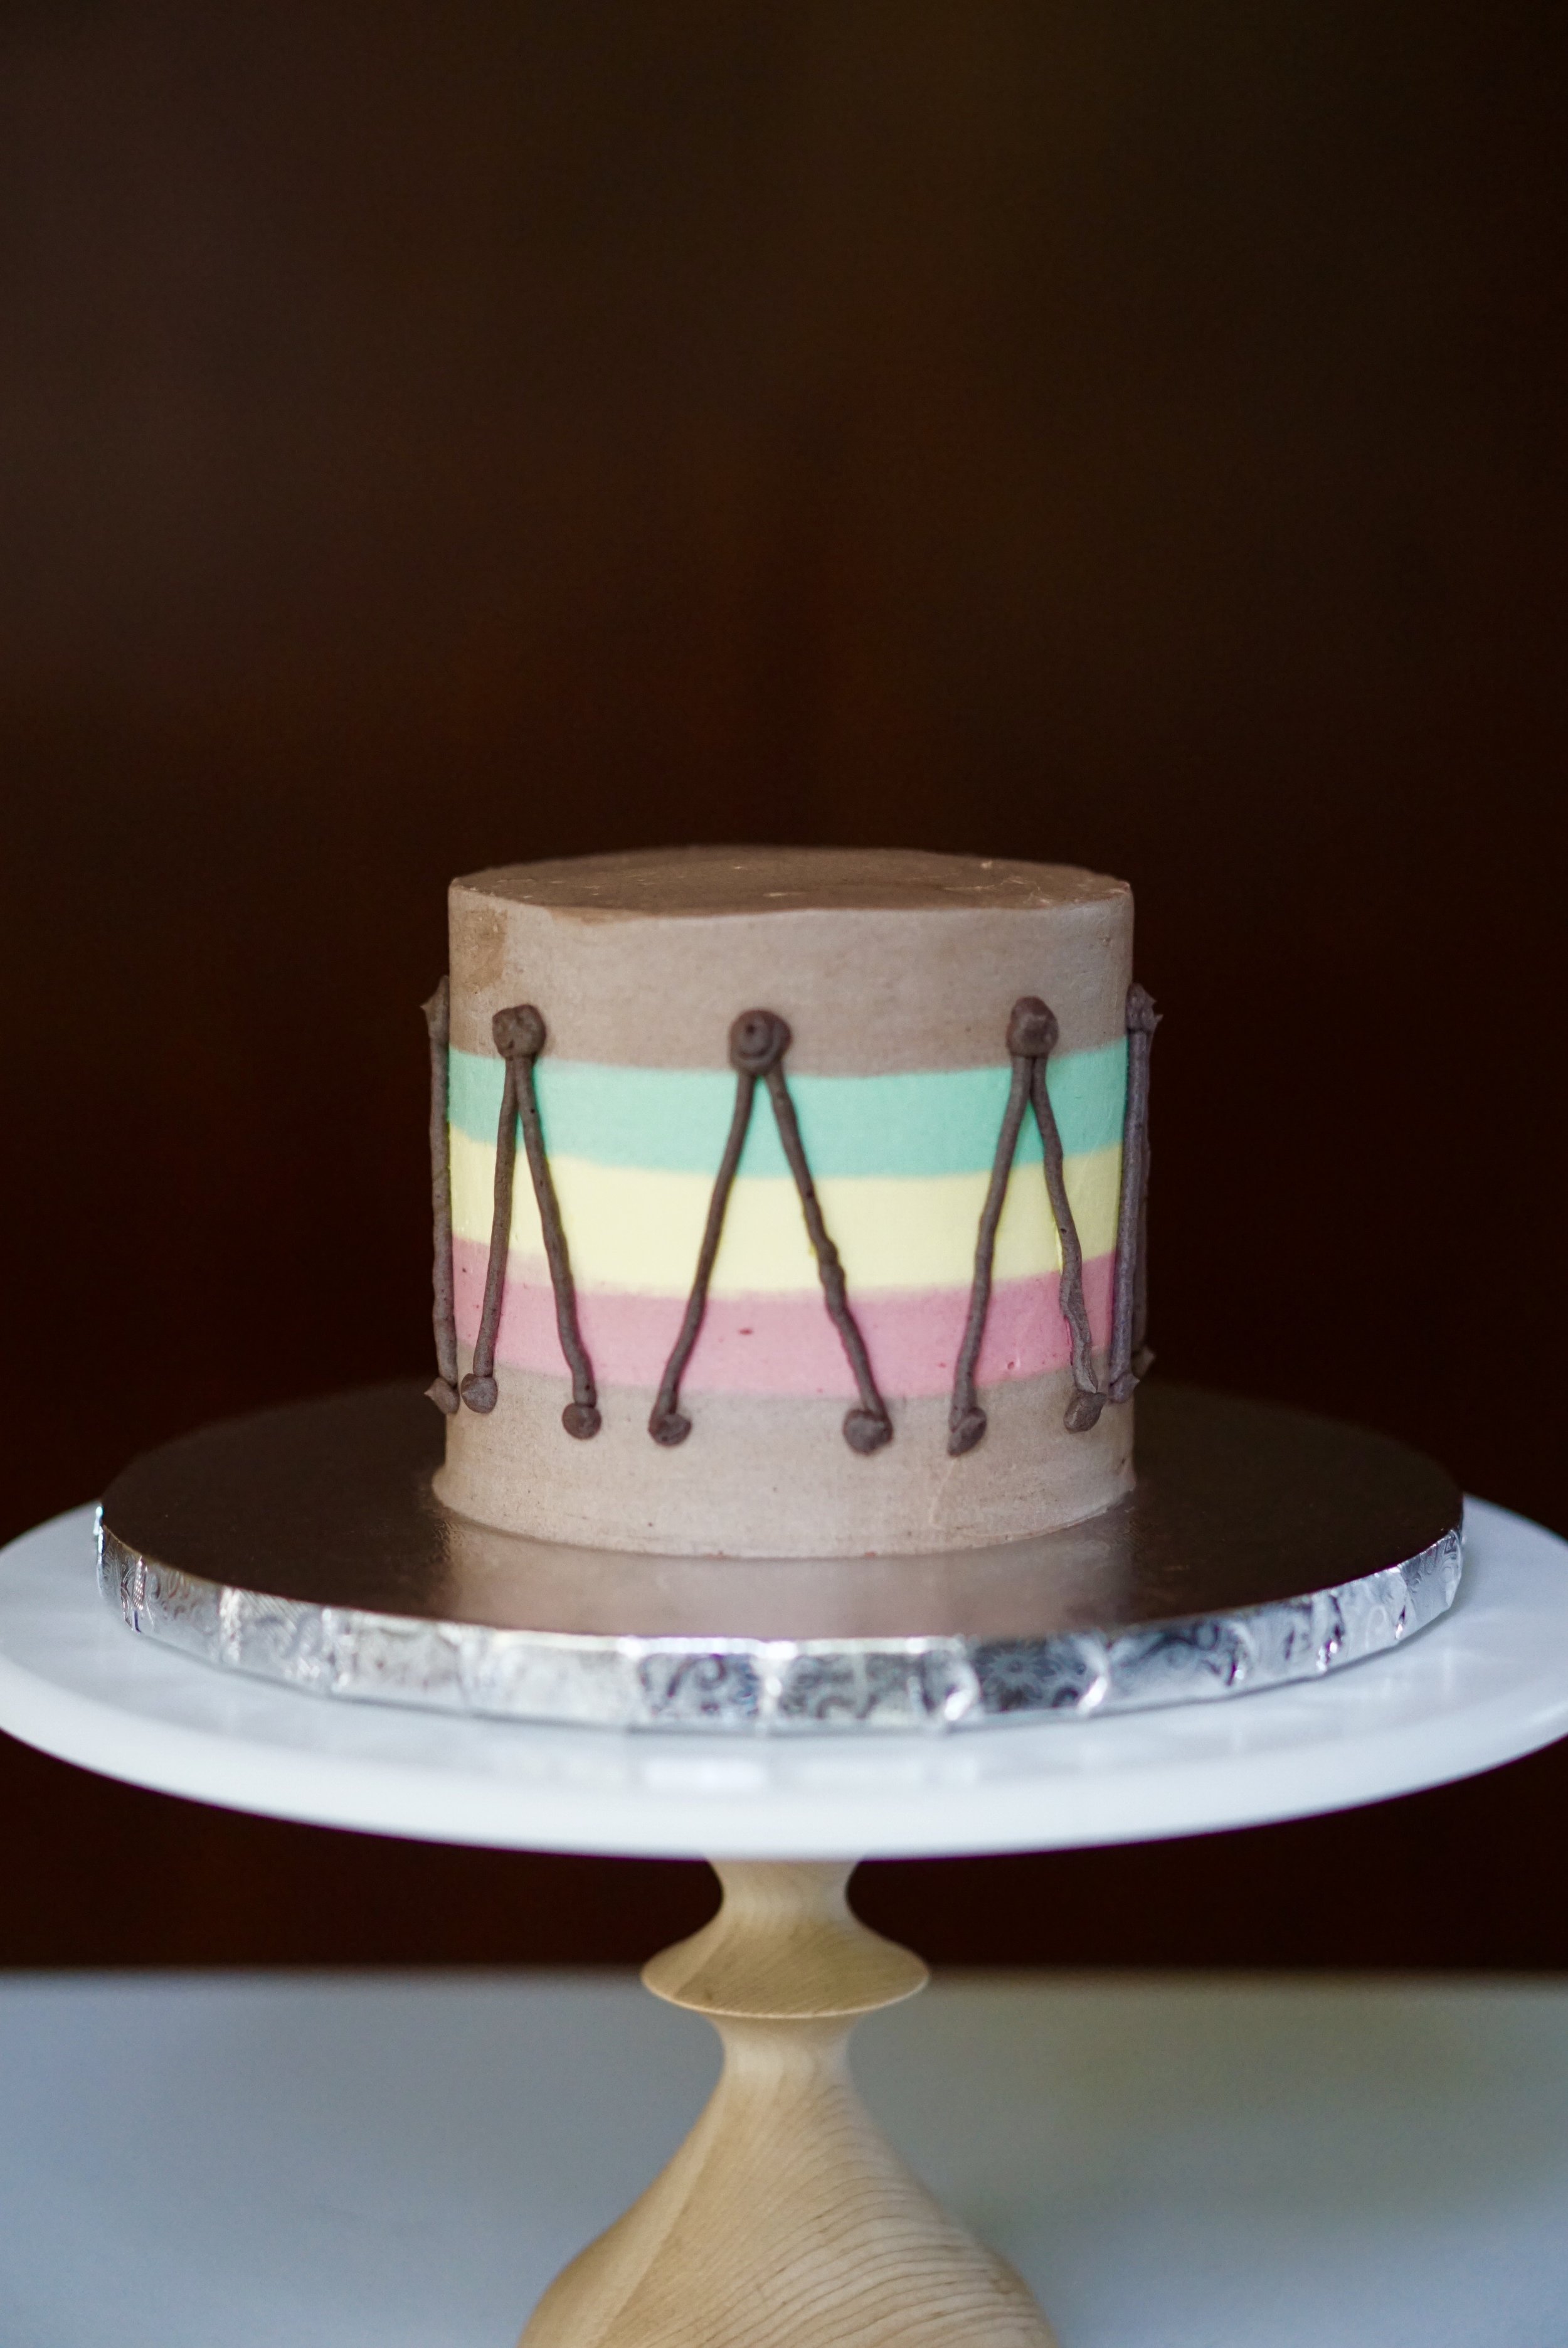 Share more than 68 bob marley birthday cake - awesomeenglish.edu.vn